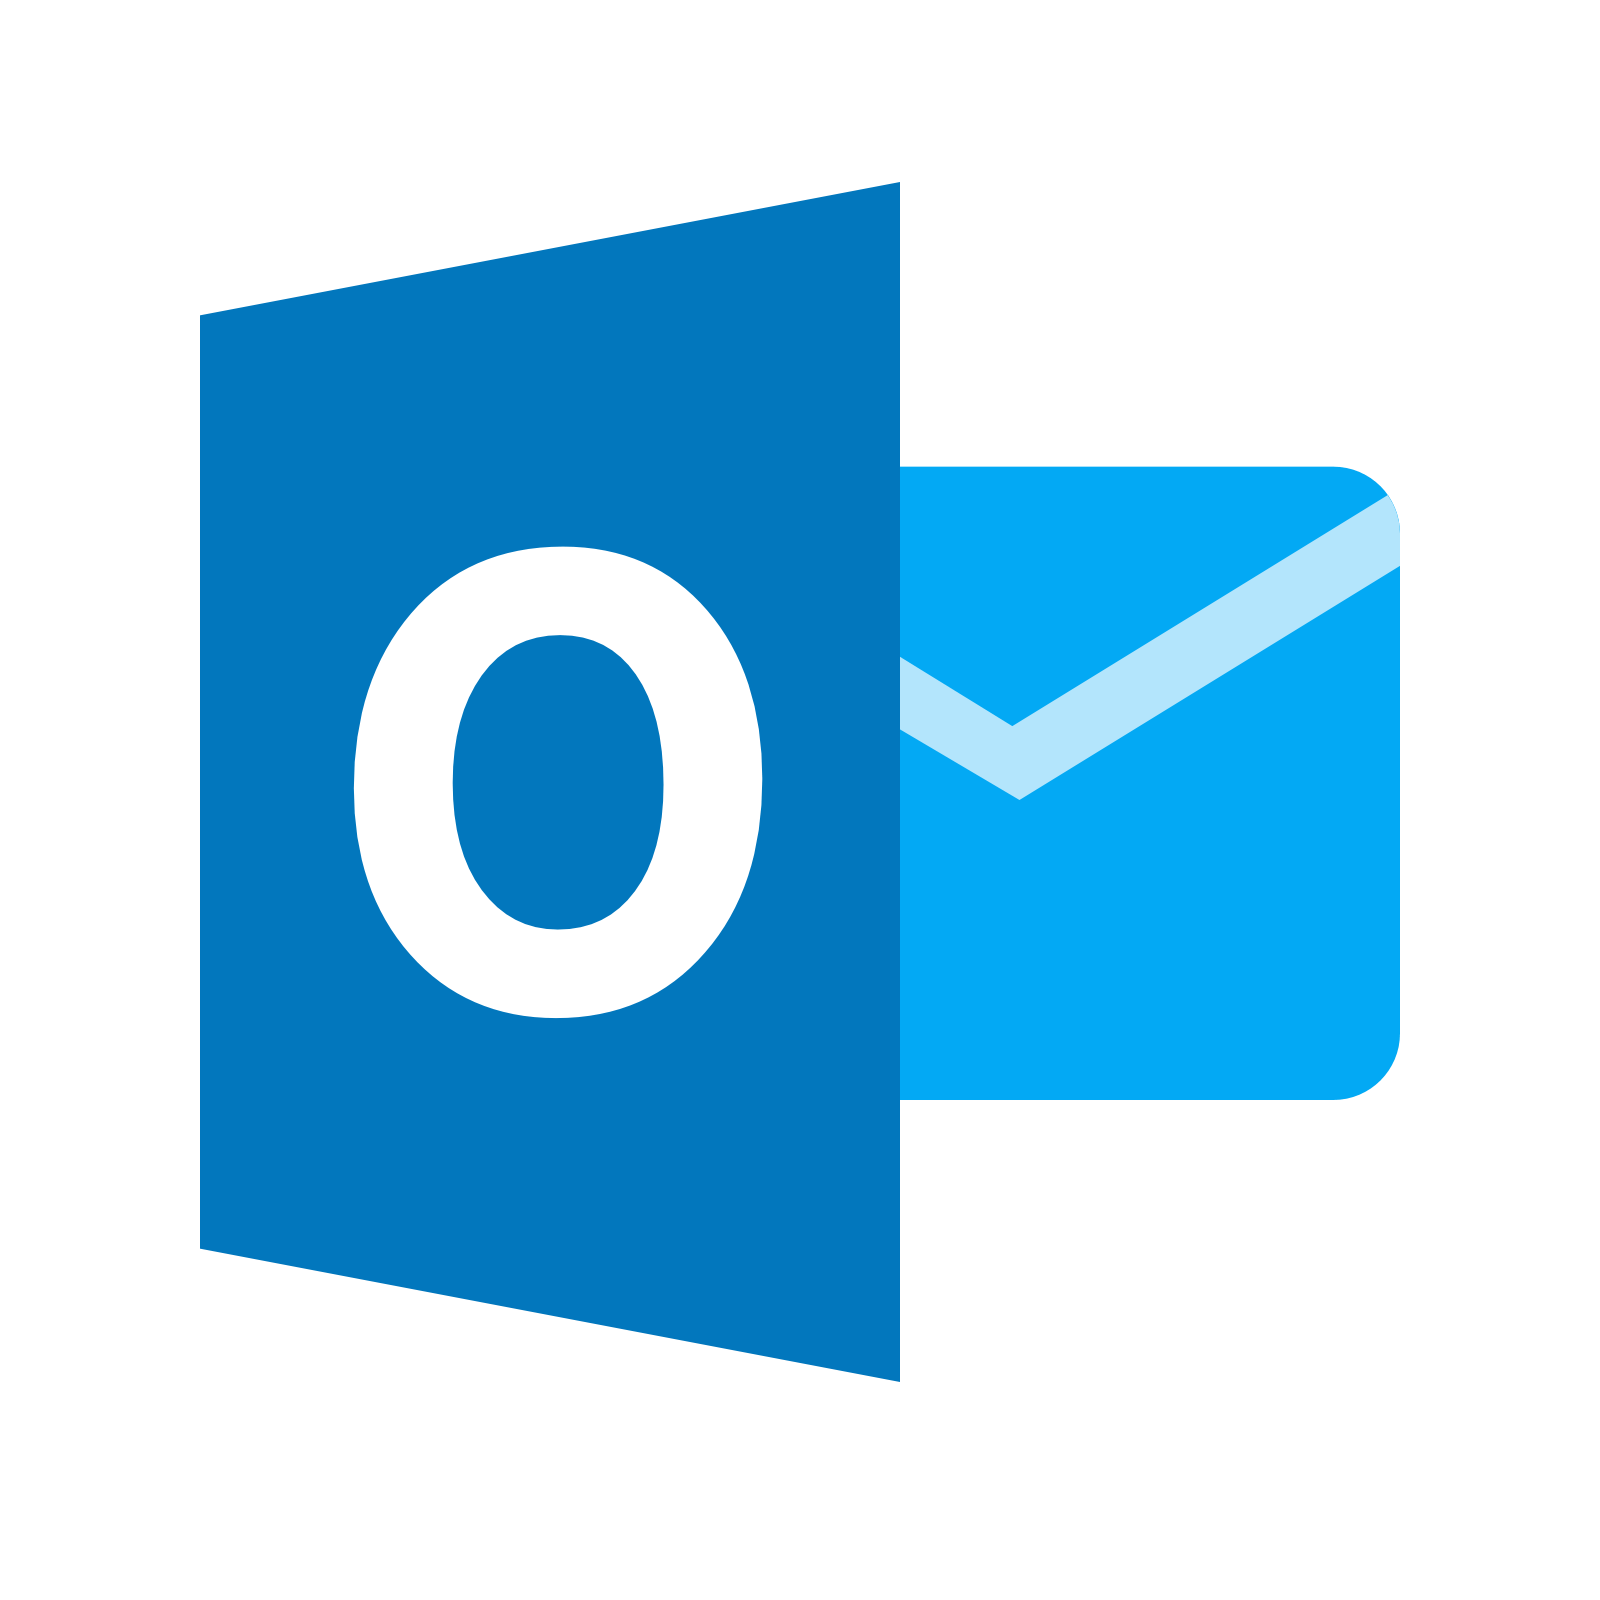 Outlook Transparent Logo - Outlook Logo. About of logos